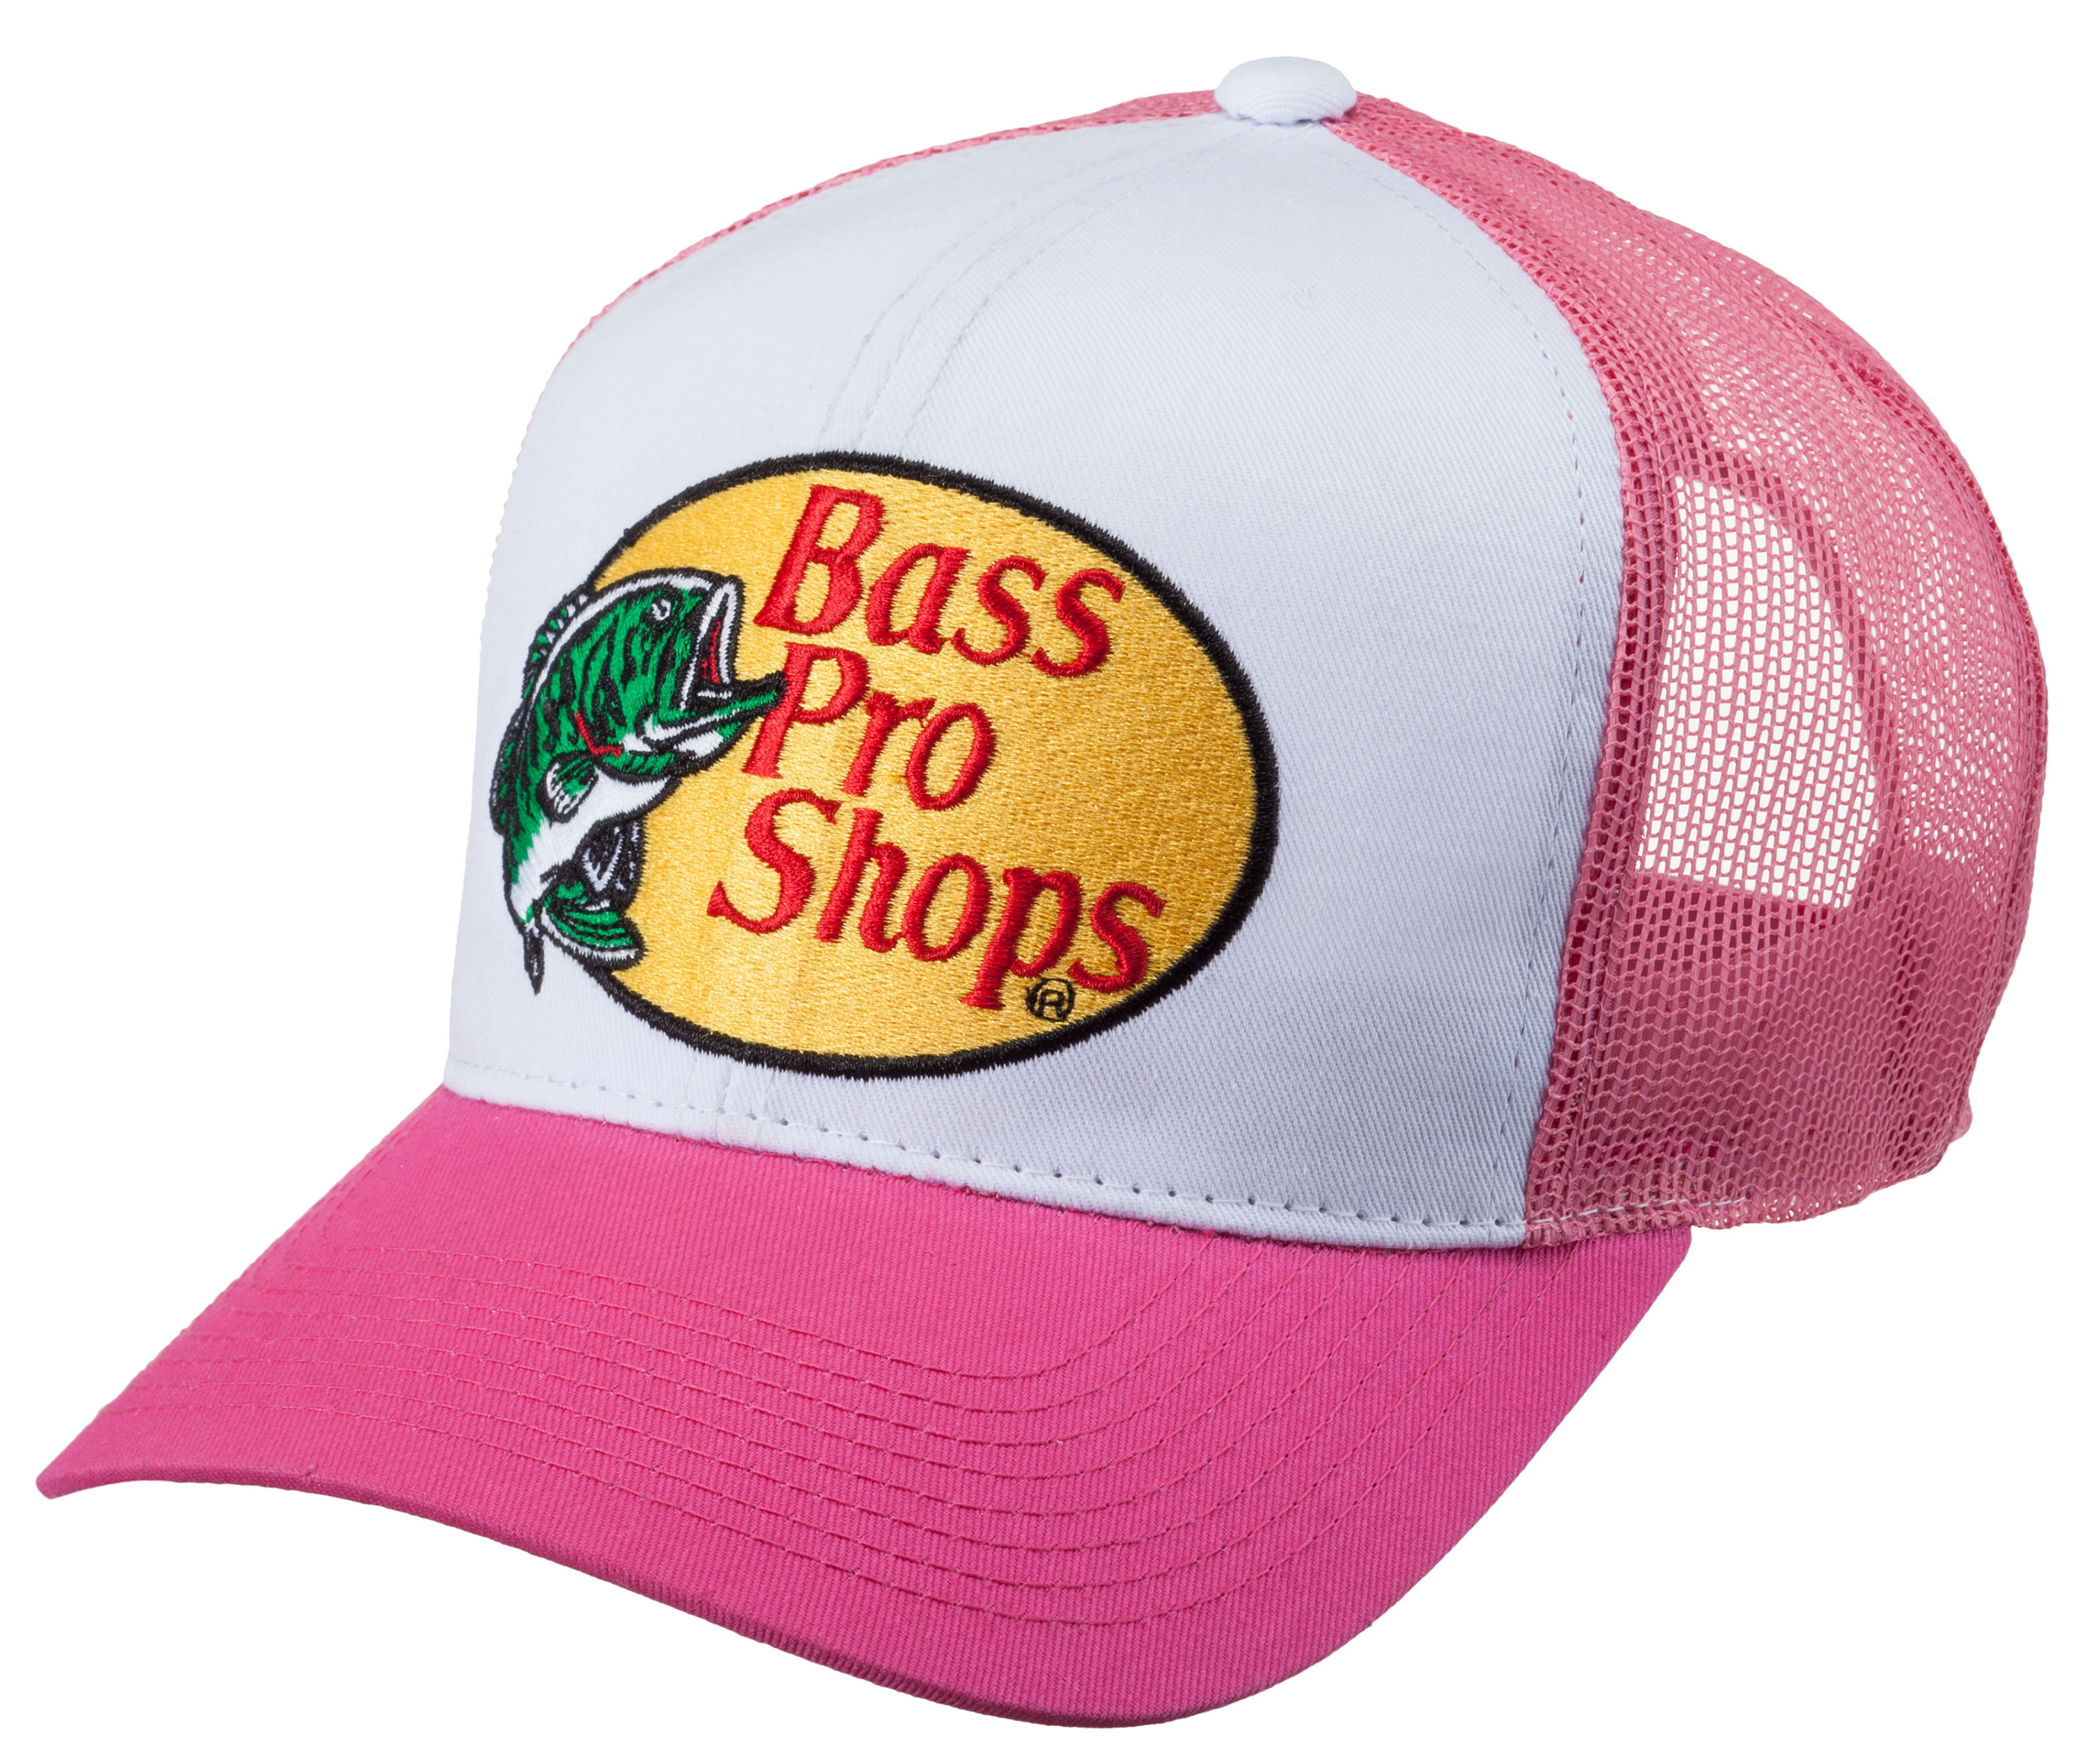 Bass Pro Shops Embroidered Logo Mesh Cap - Navy